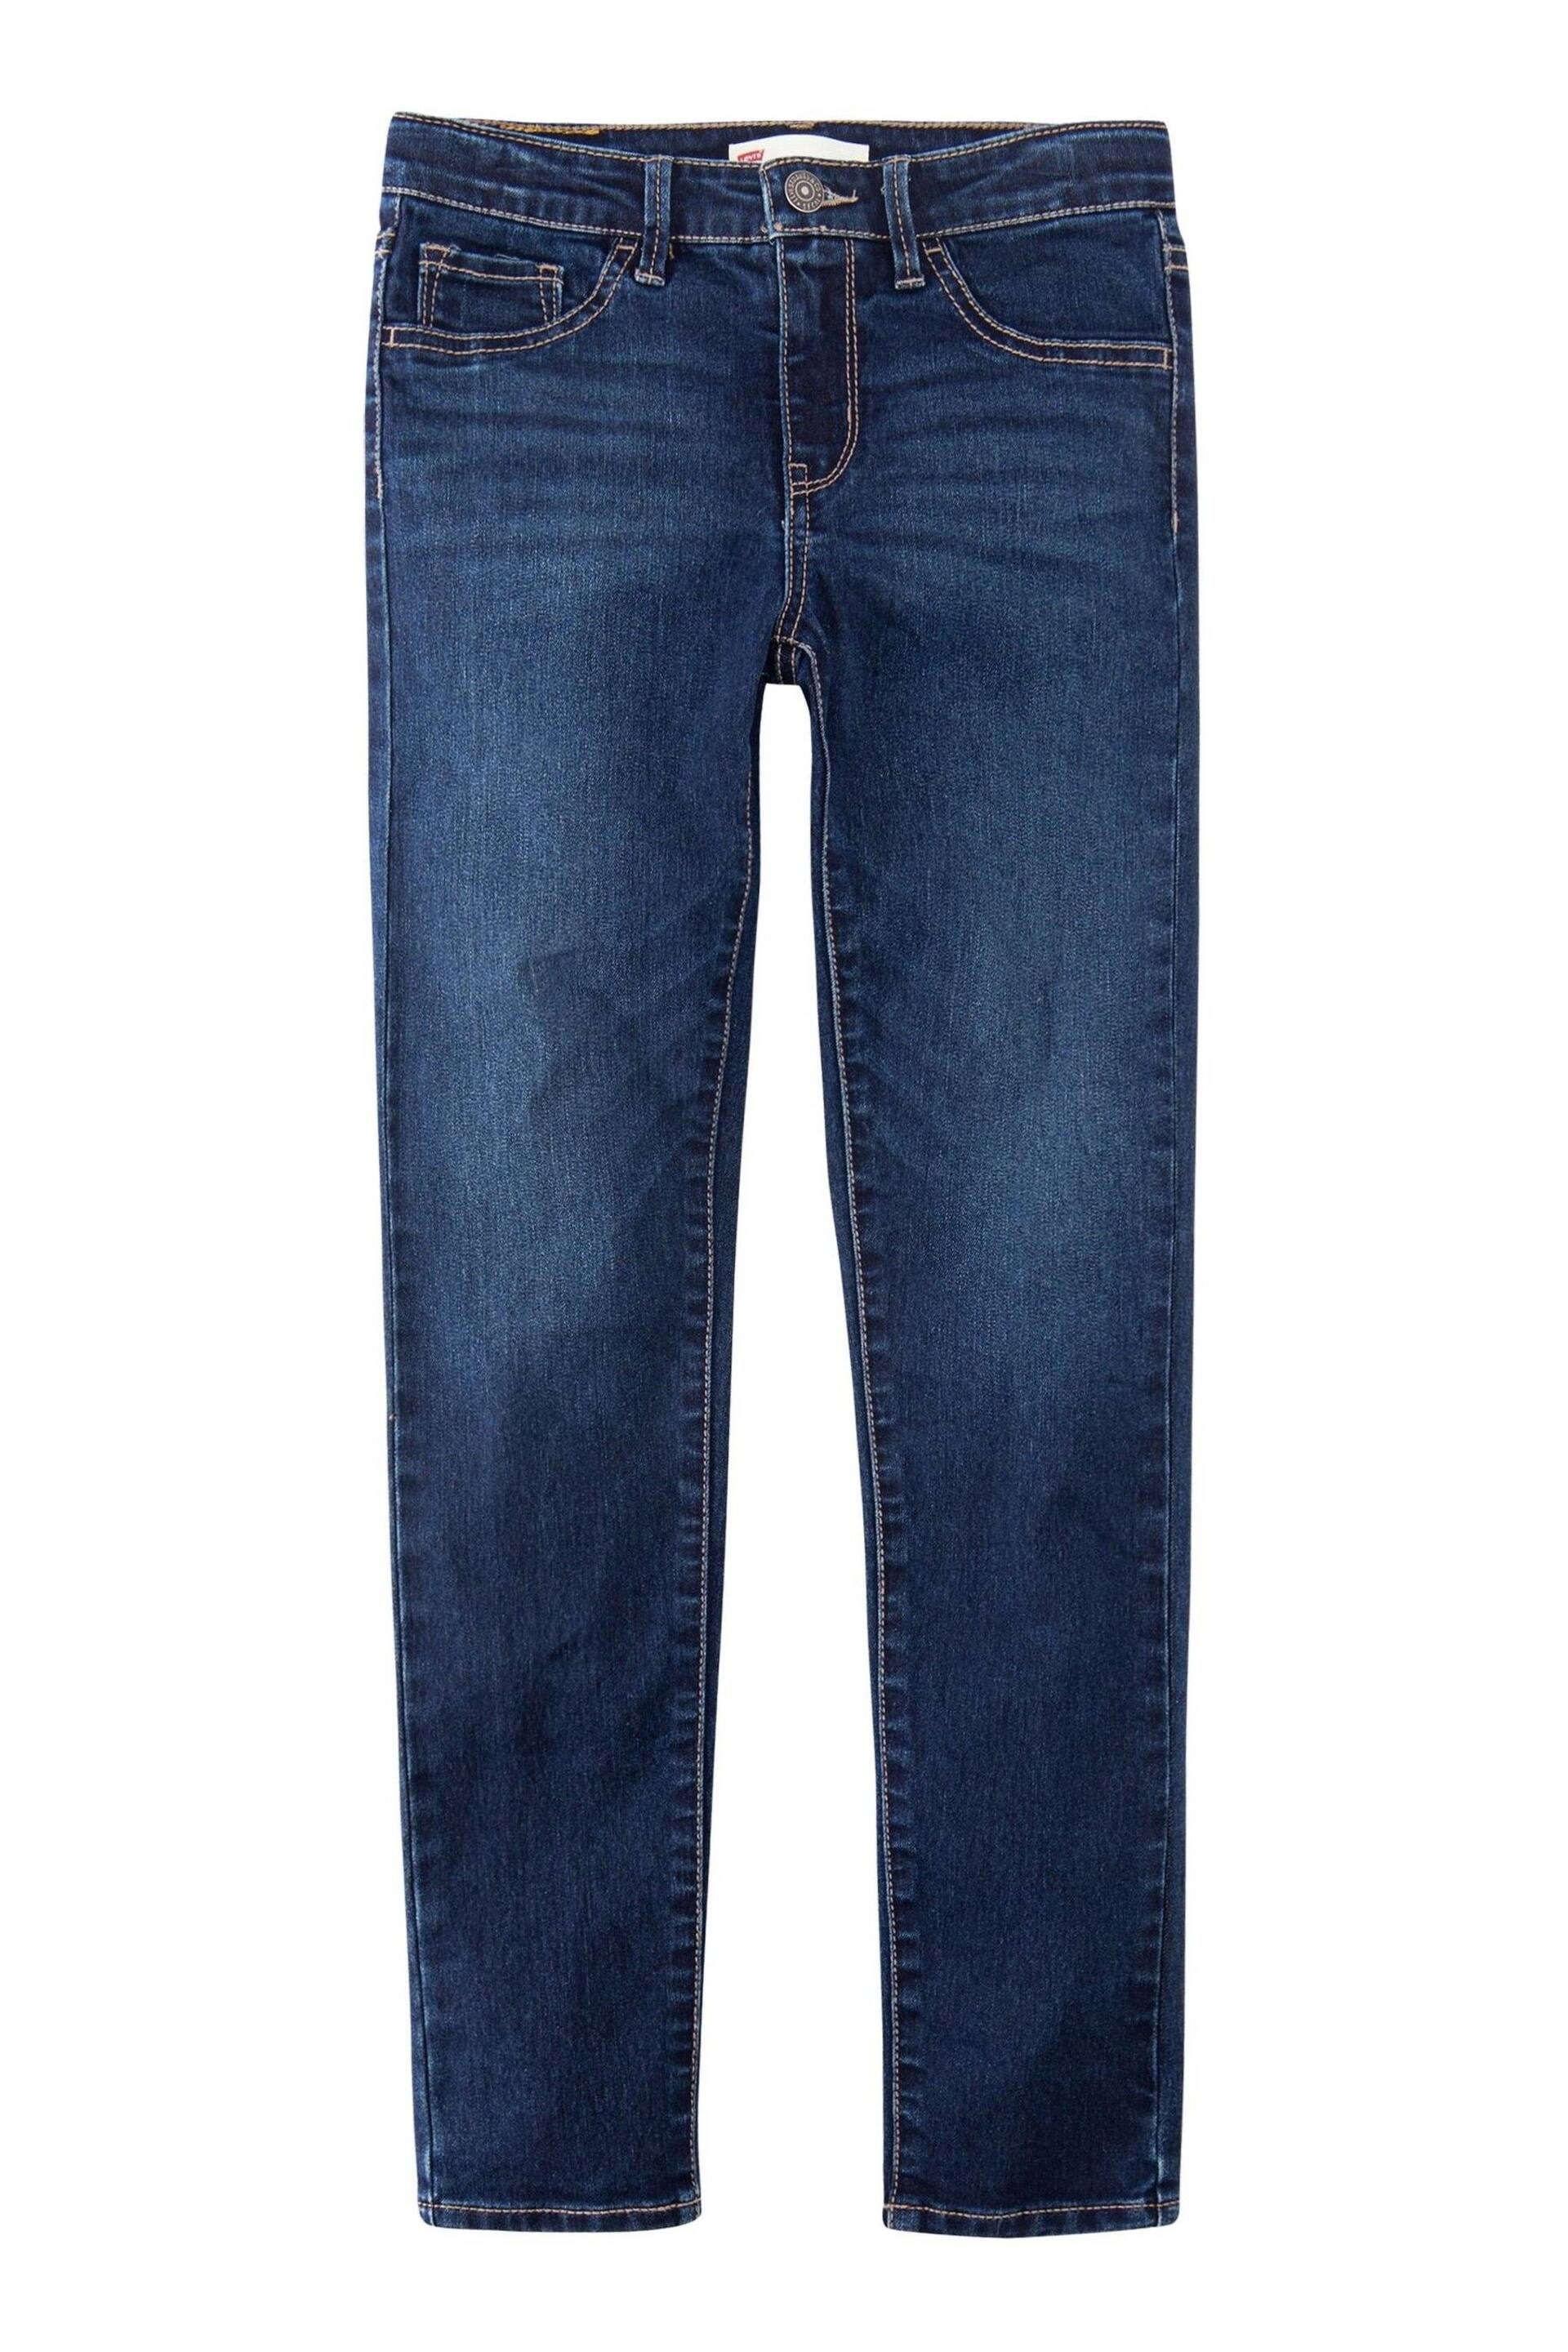 Levi's® Complex 710™ Super Skinny Jeans - Image 5 of 7